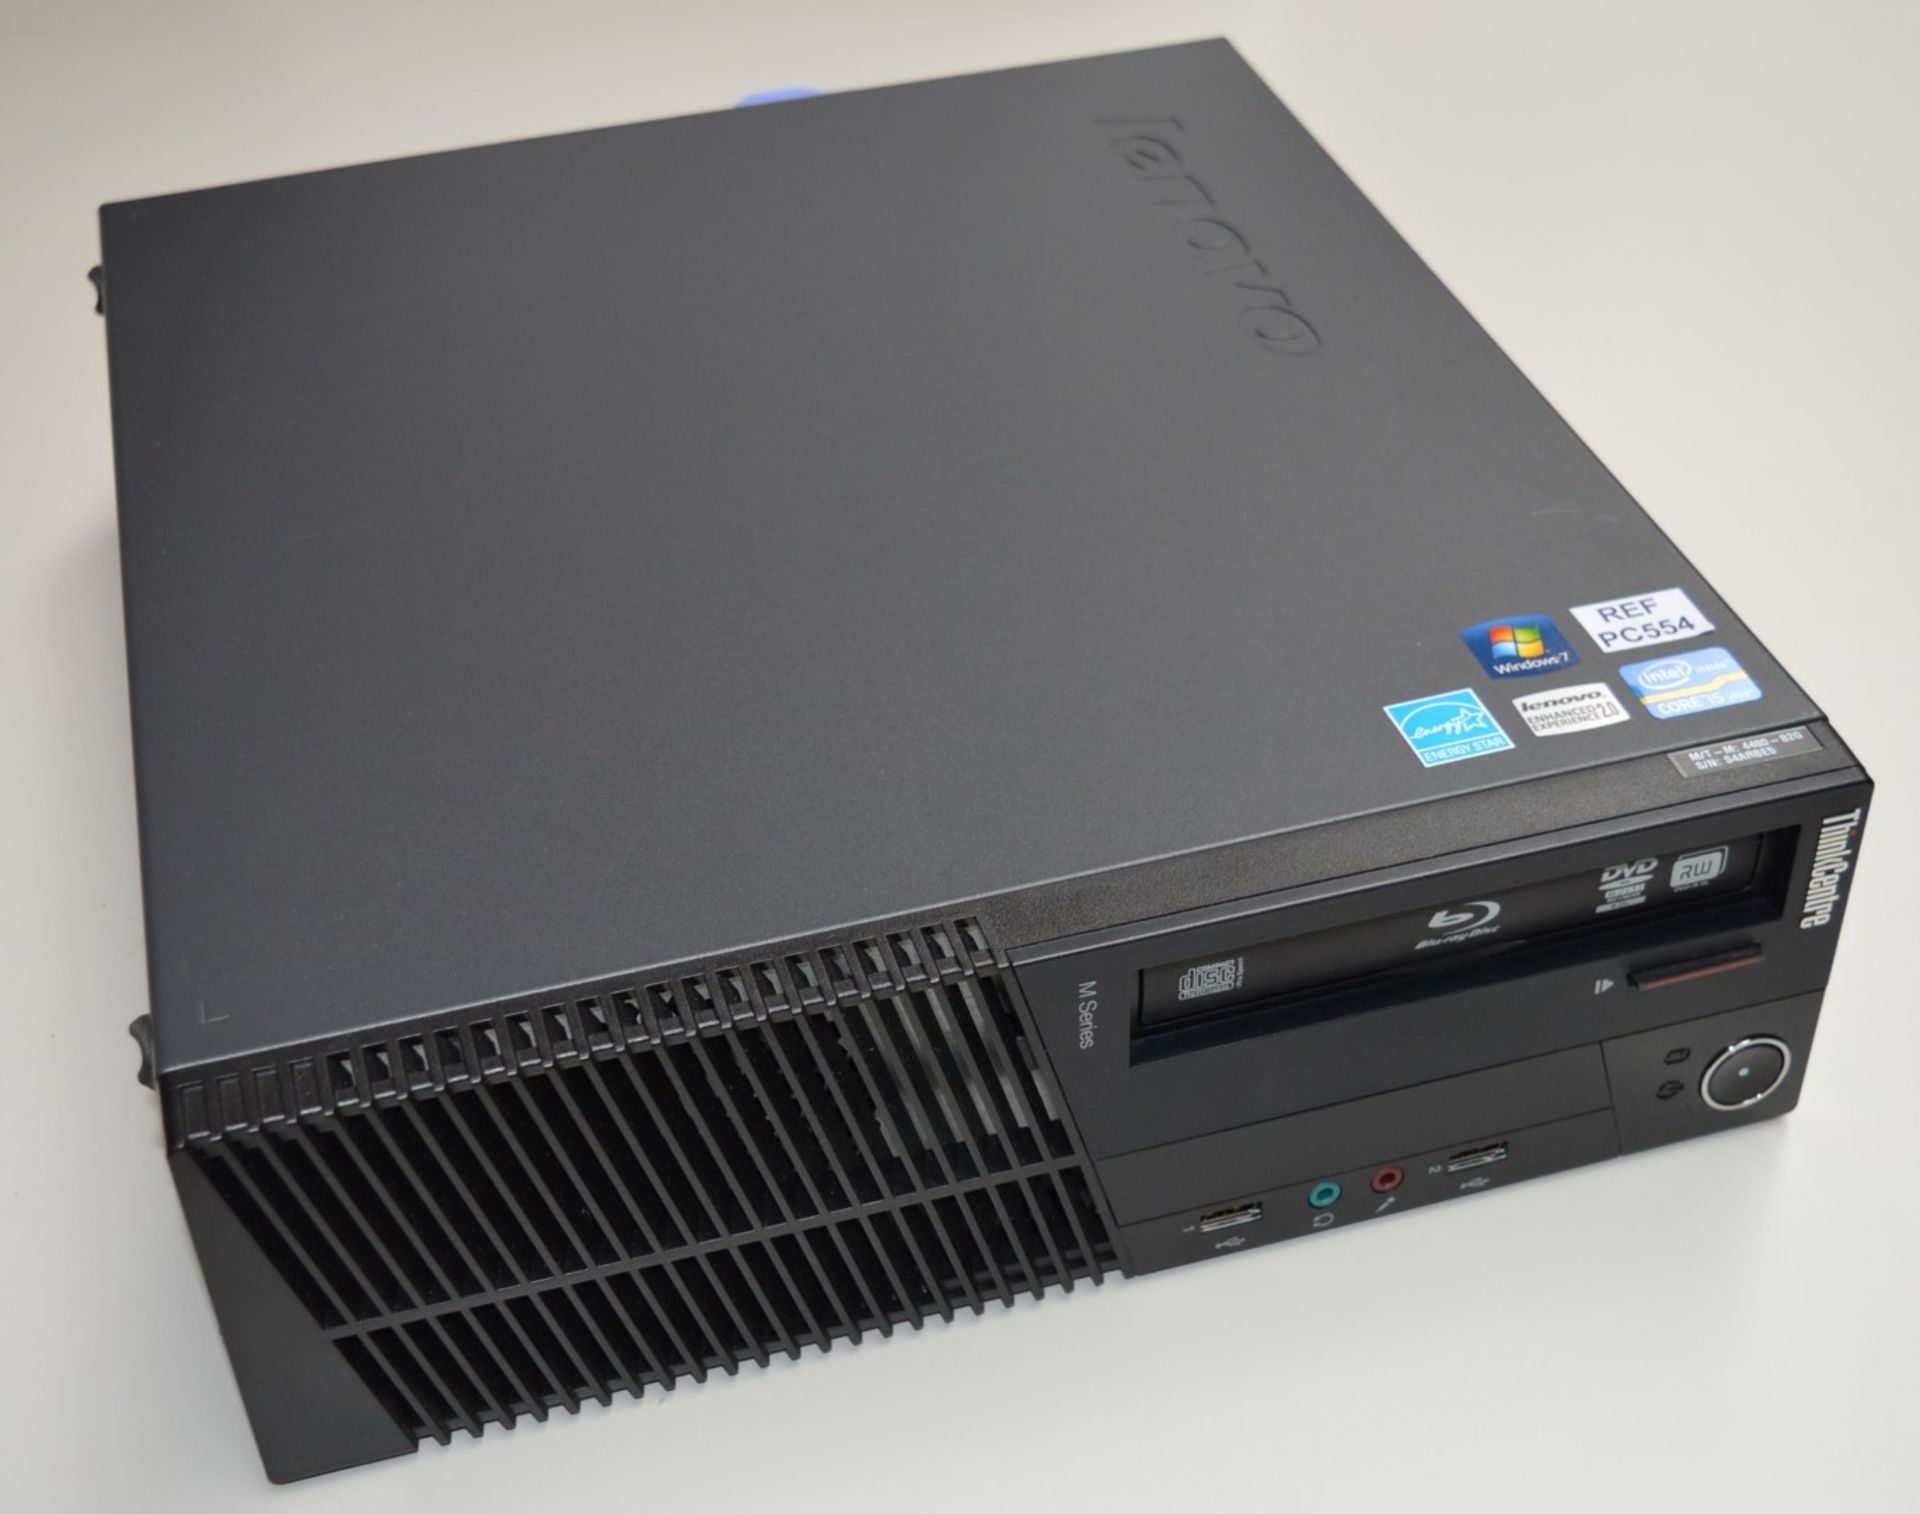 1 x Lenovo ThinkCentre SFF Desktop Computer - Intel Core i5-2400 3.1ghz Processor, 4gb DDR3 Ram,